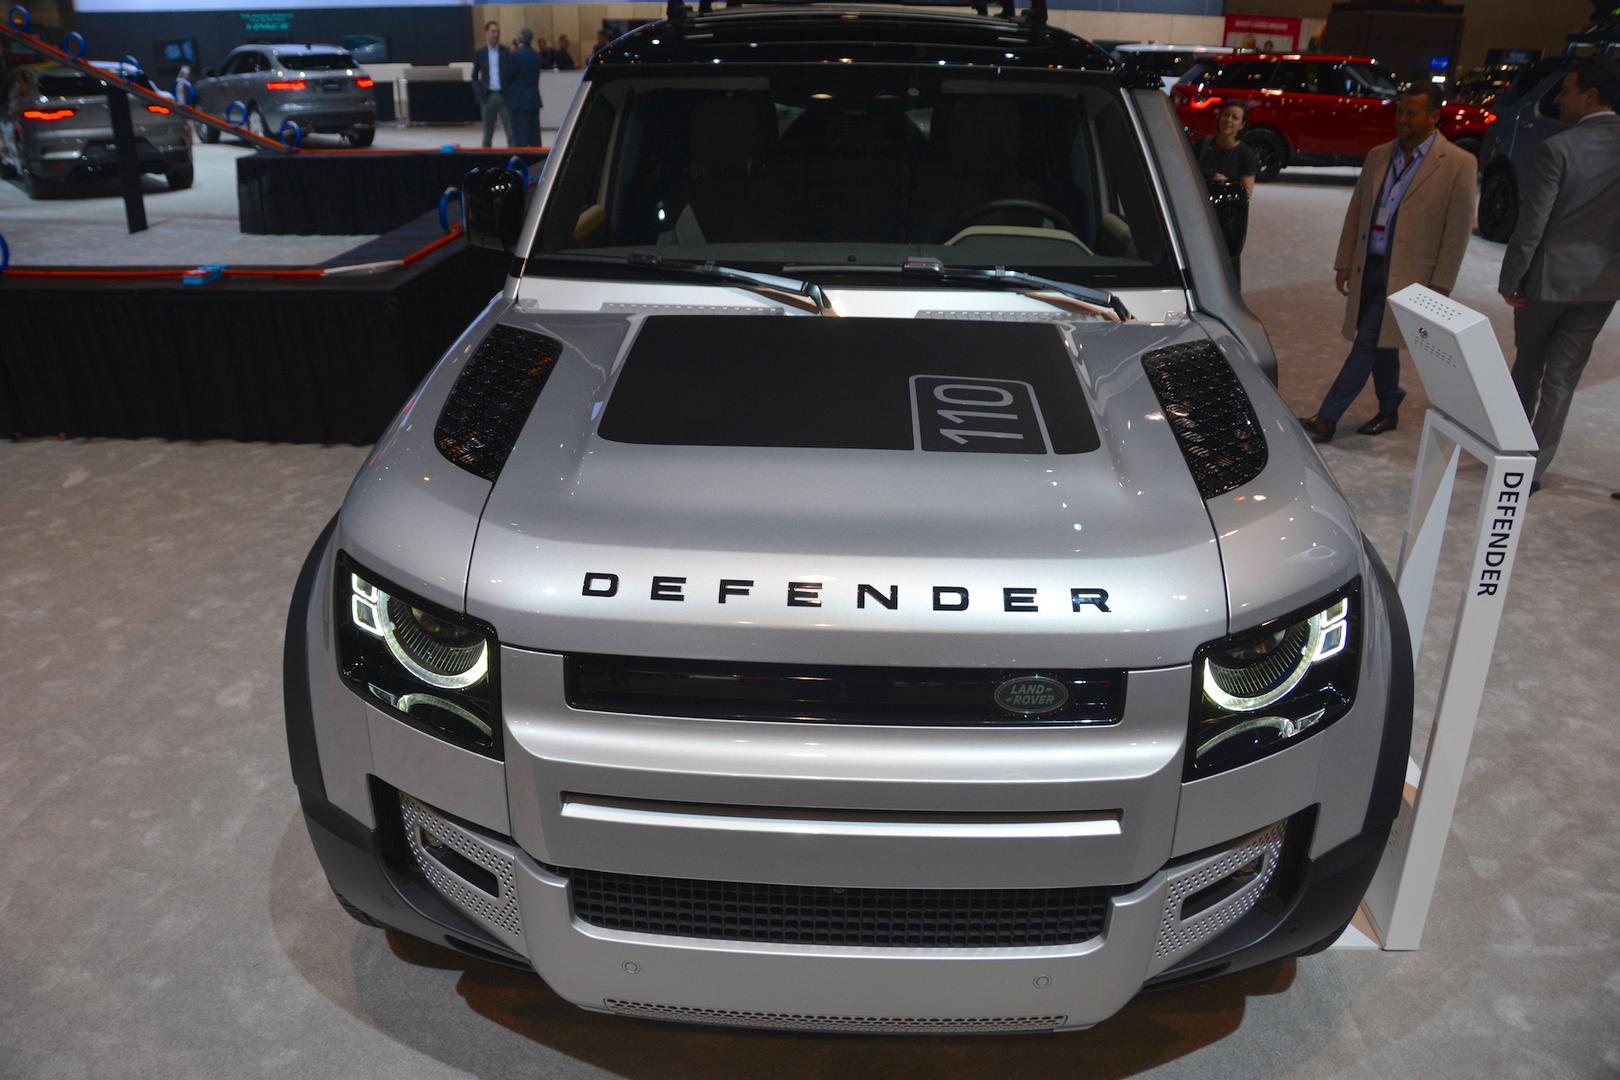 2020 Land Rover Defender Headlights